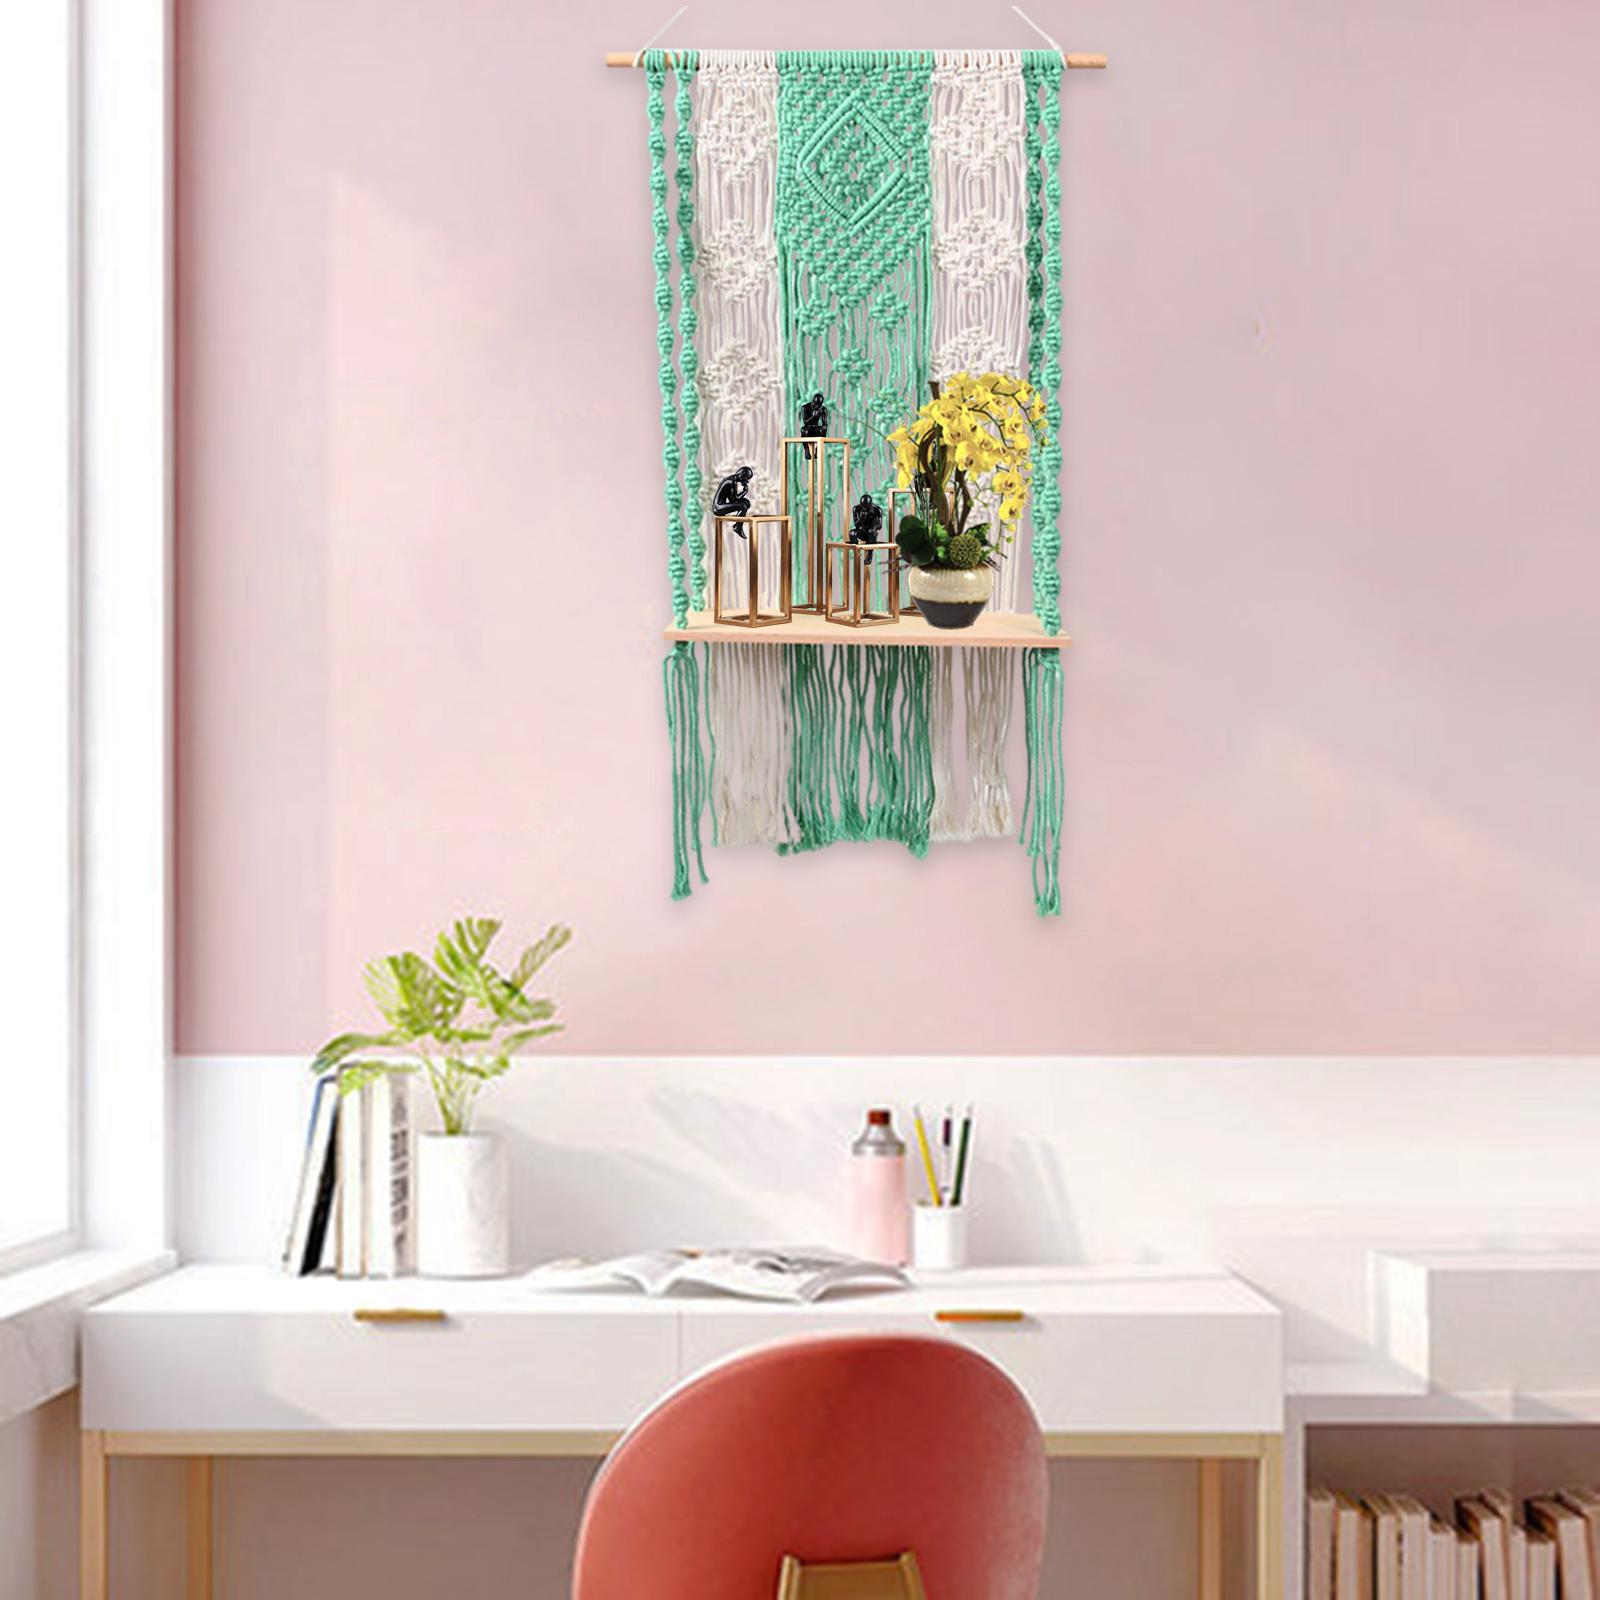 Tapestry Wall Shelf Home Decor Magazines Flowerpot Organizer for Living Room Green